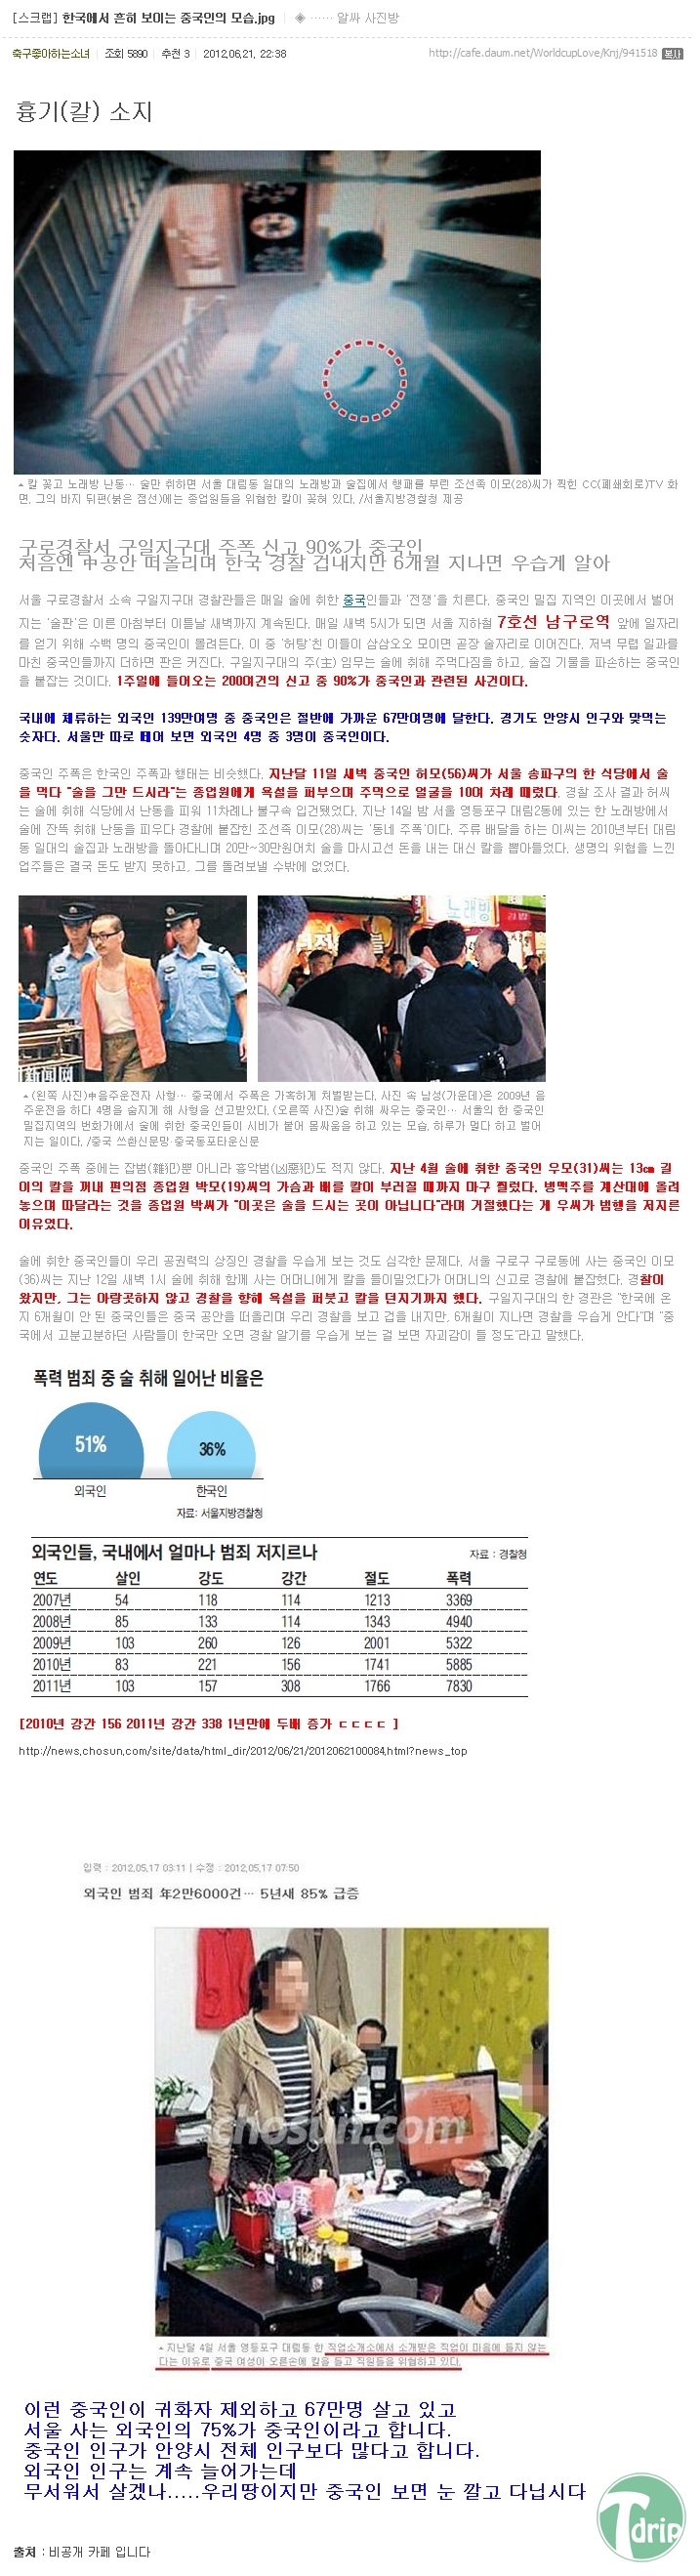 1 (1).jpg : 한국에서 짱깨들의 실태.jpg